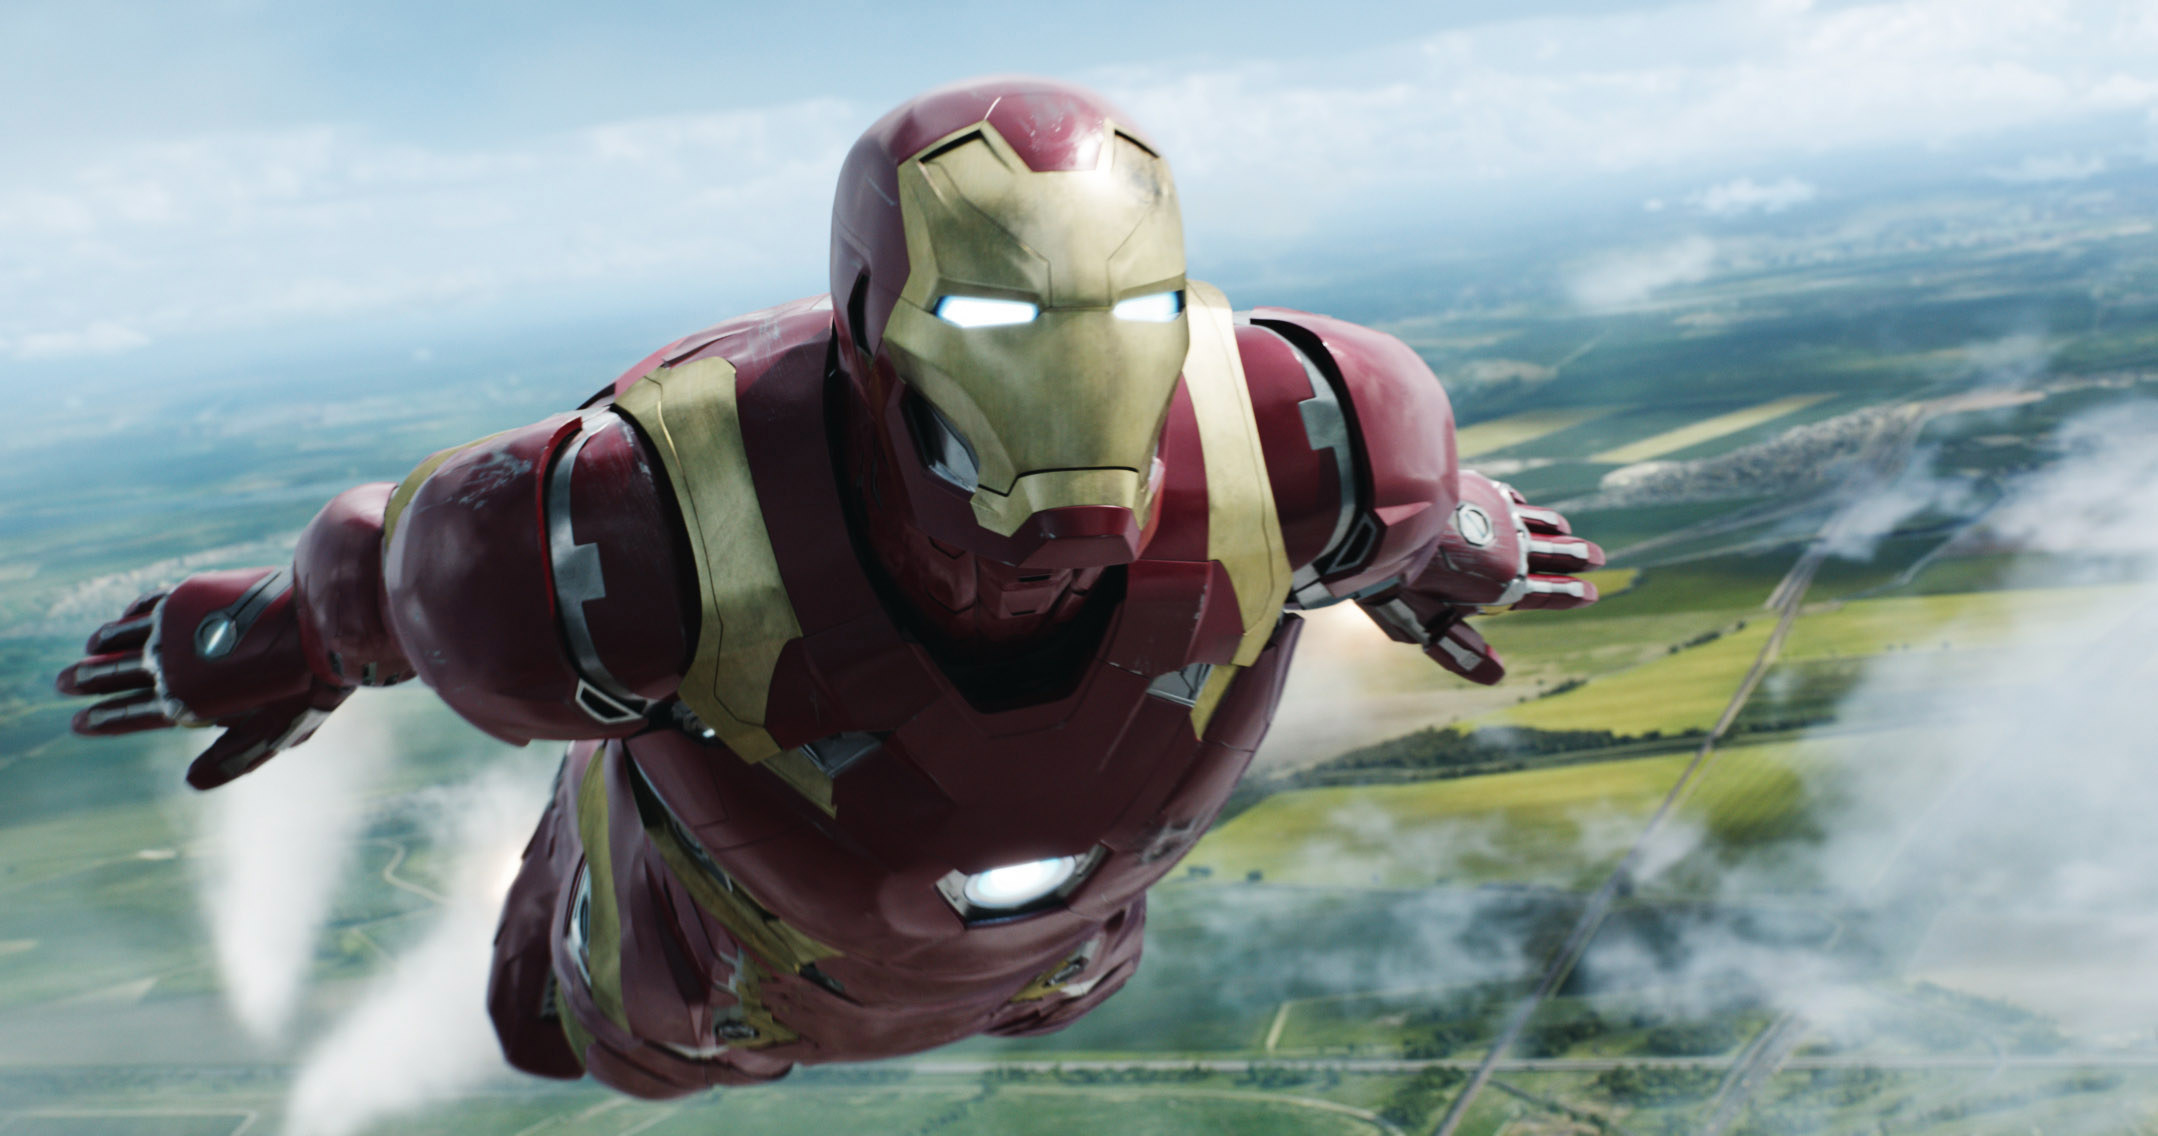 Iron Man wearing a suit in Civil War